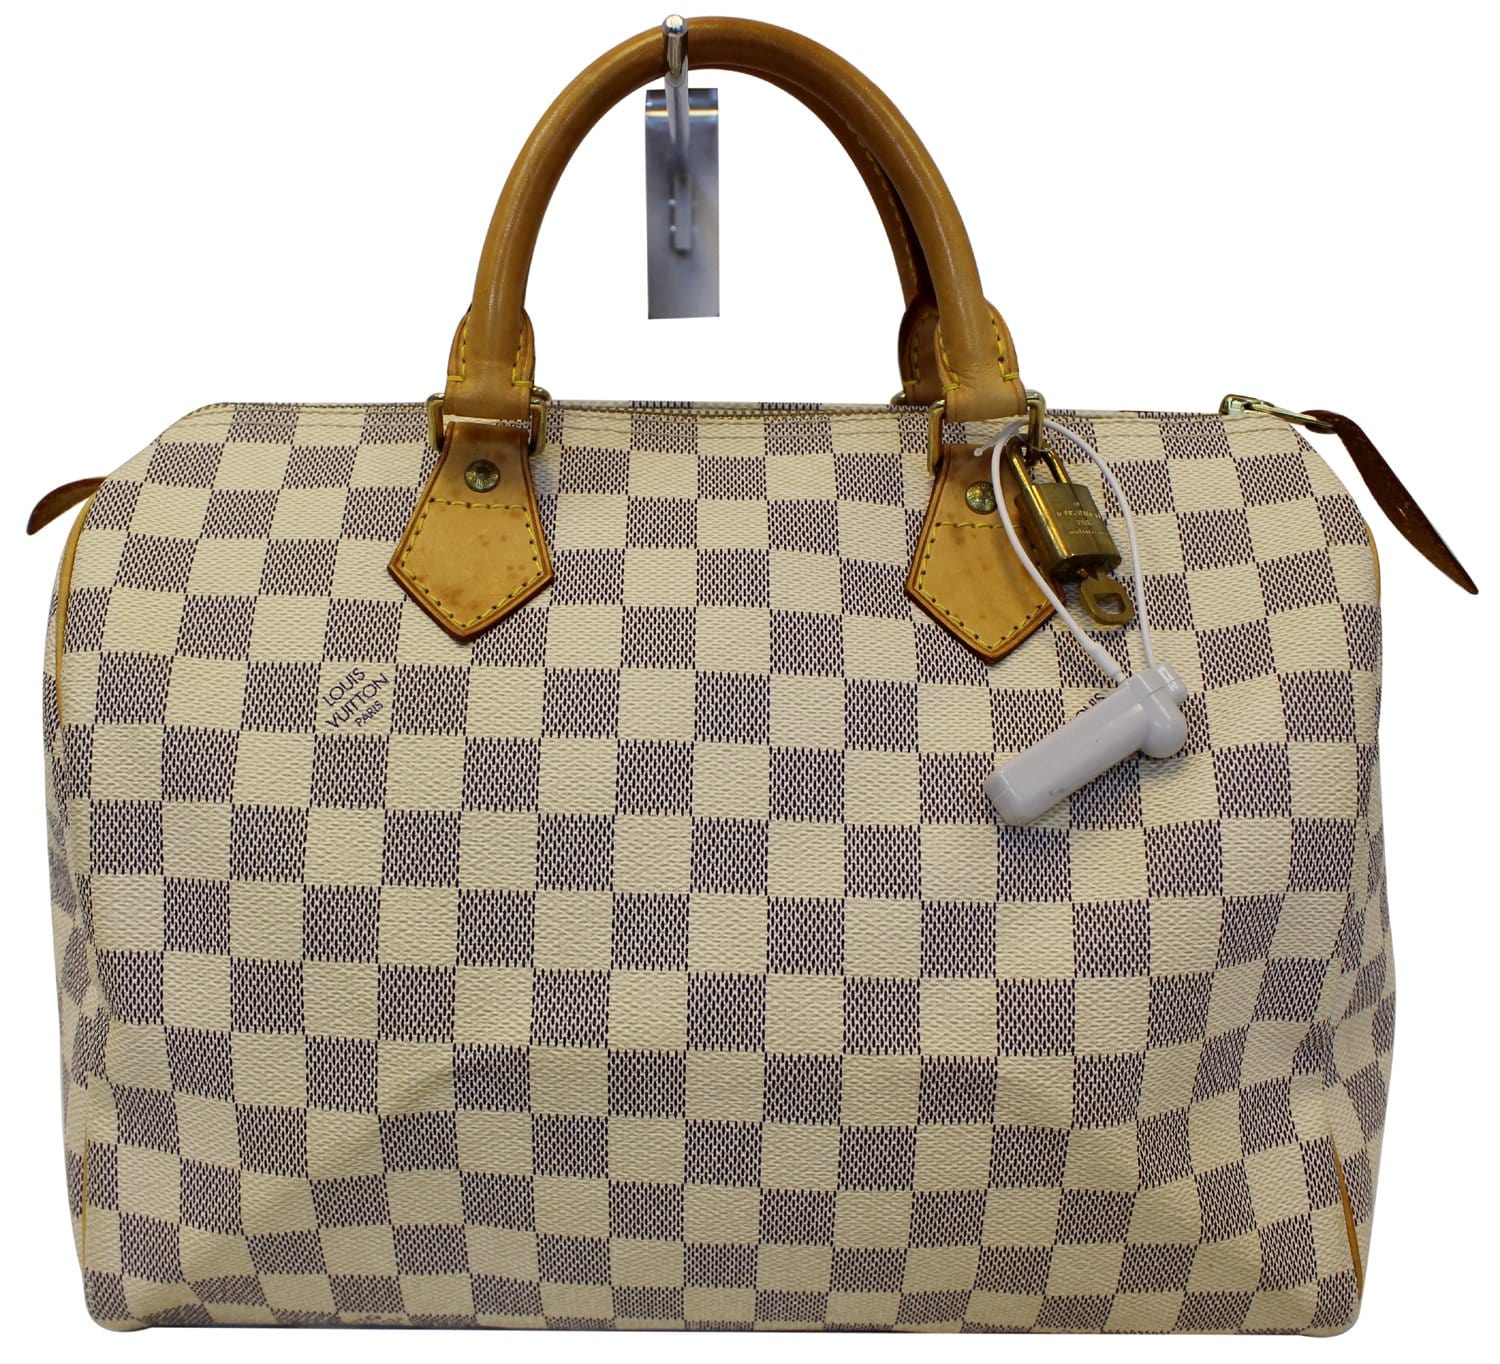 Speedy Bandoulière 30 Damier Azur Canvas - Women - Handbags